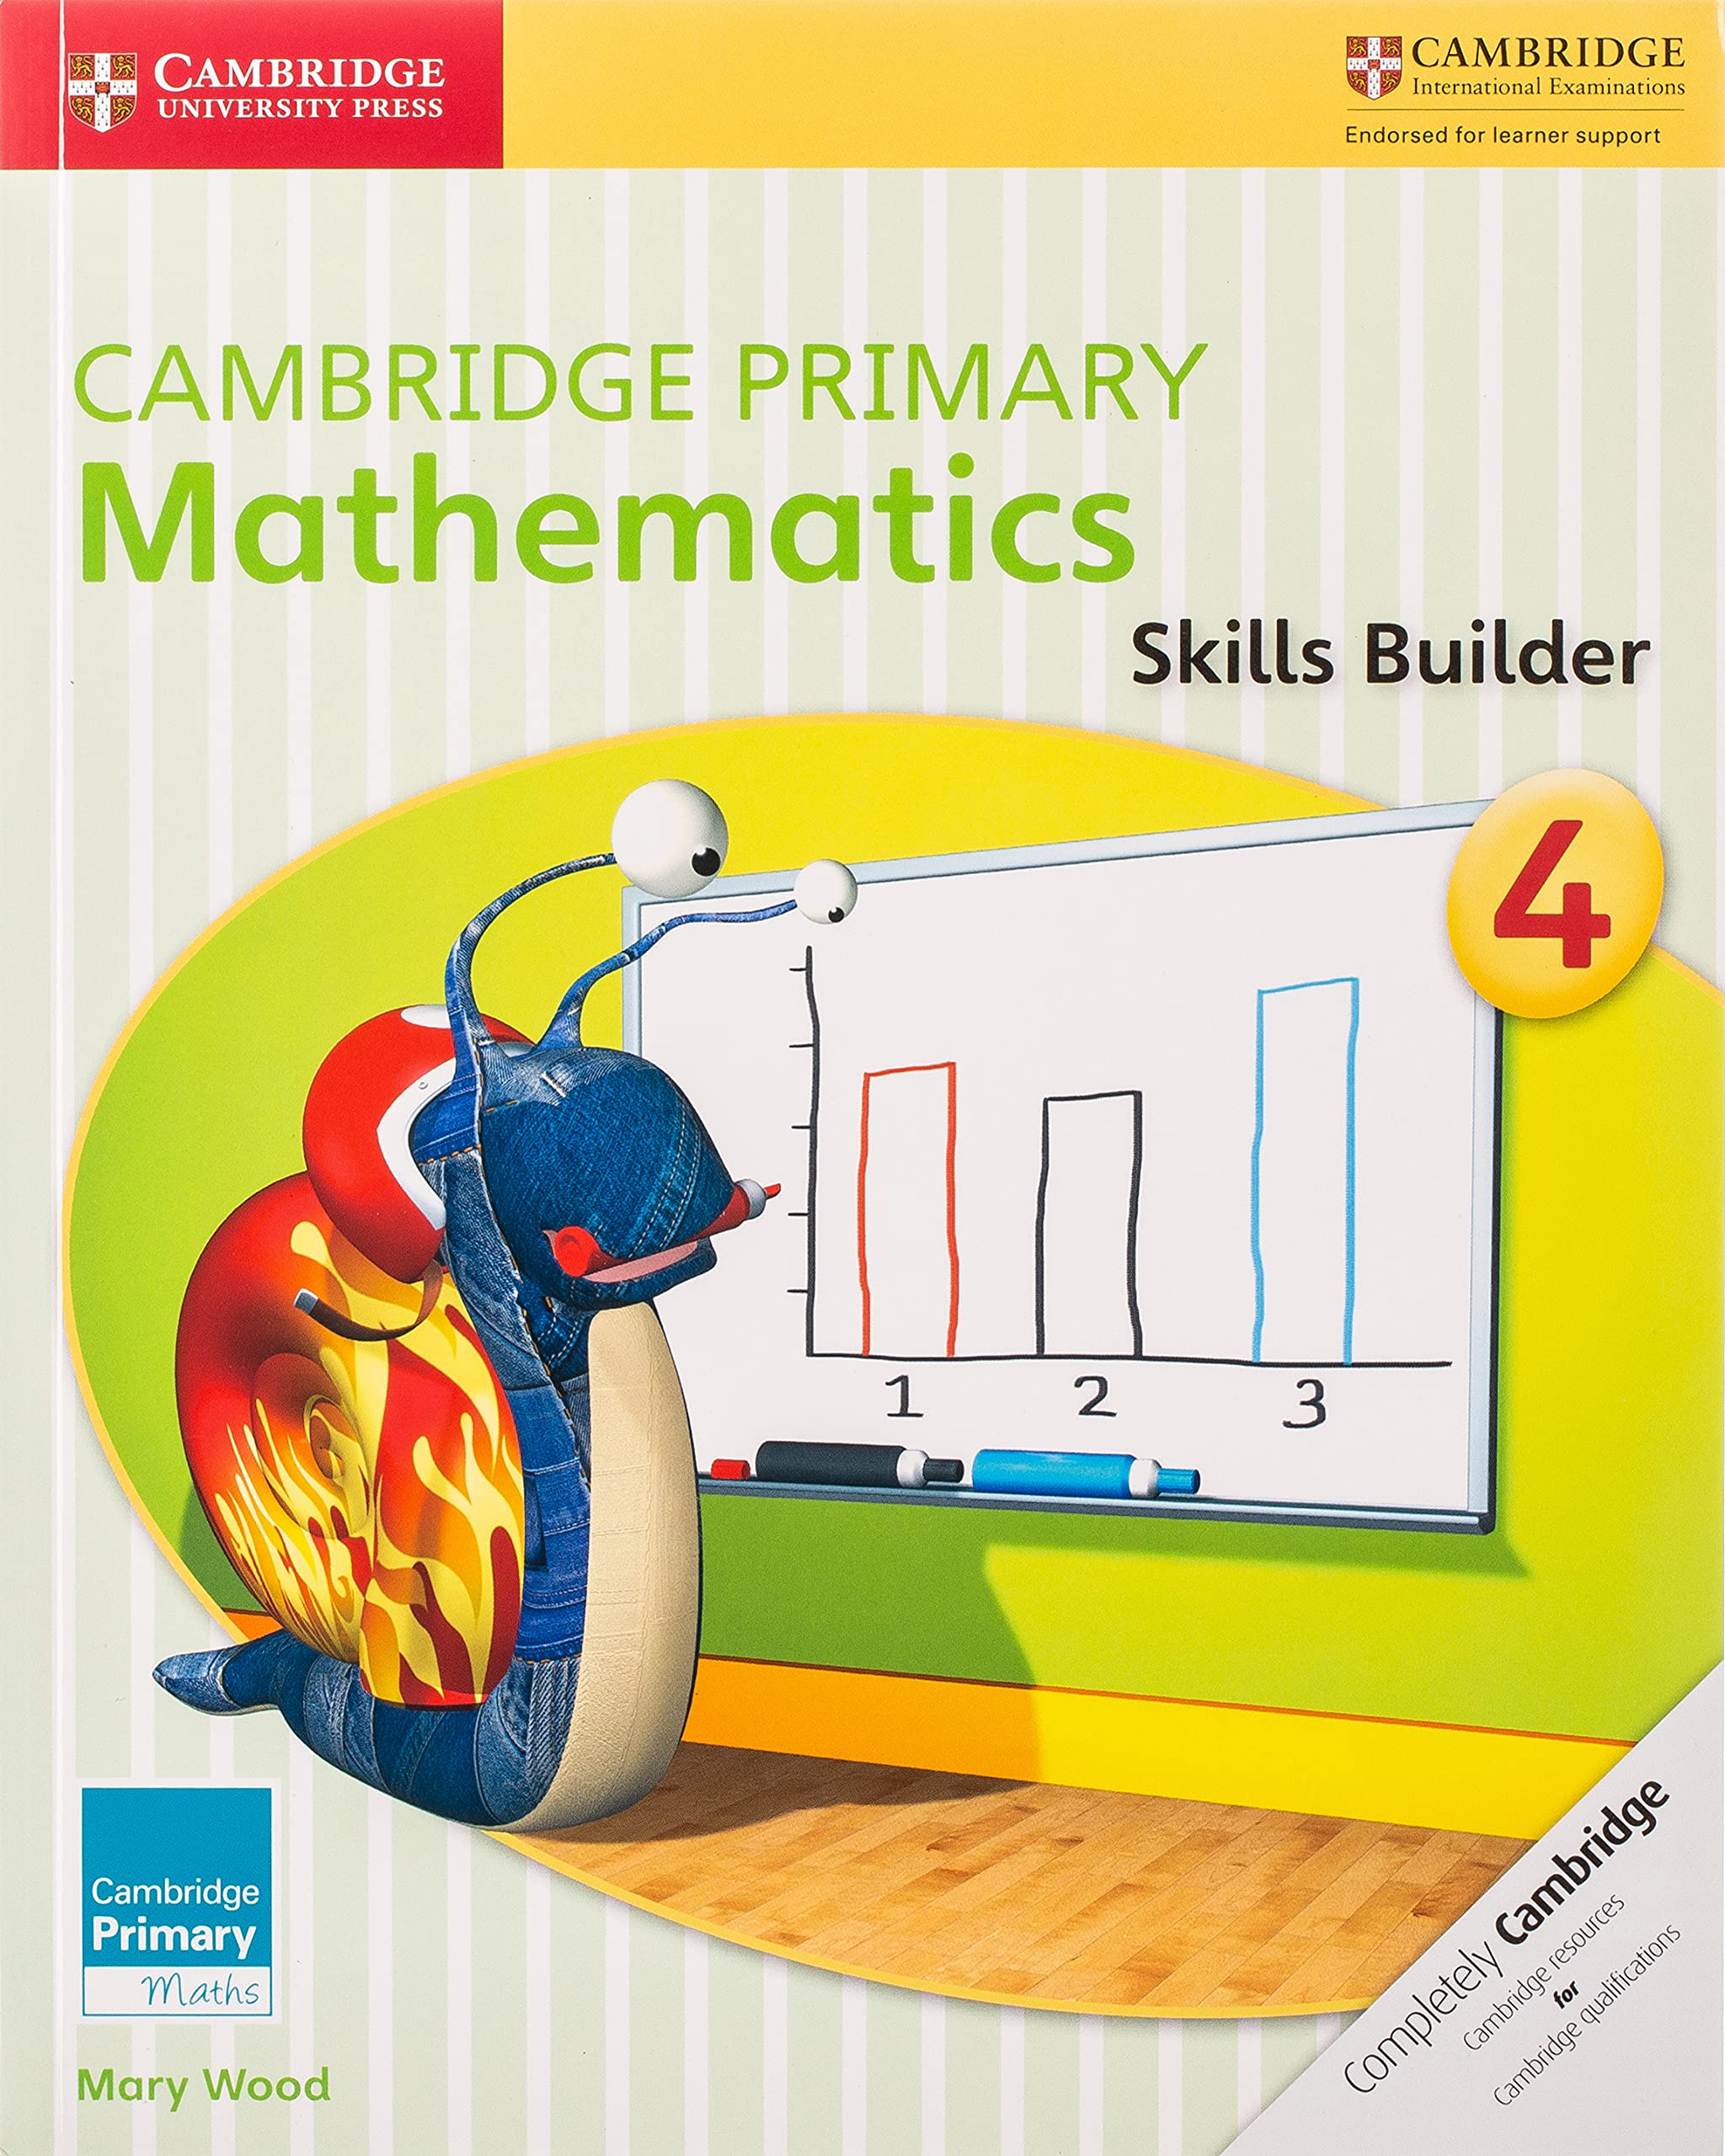 Cambridge mathematics. Cambridge Primary Mathematics. Cambridge Mathematics books. Primary Cambridge Maths. Cambridge Primary Mathematics skills Builder 2.